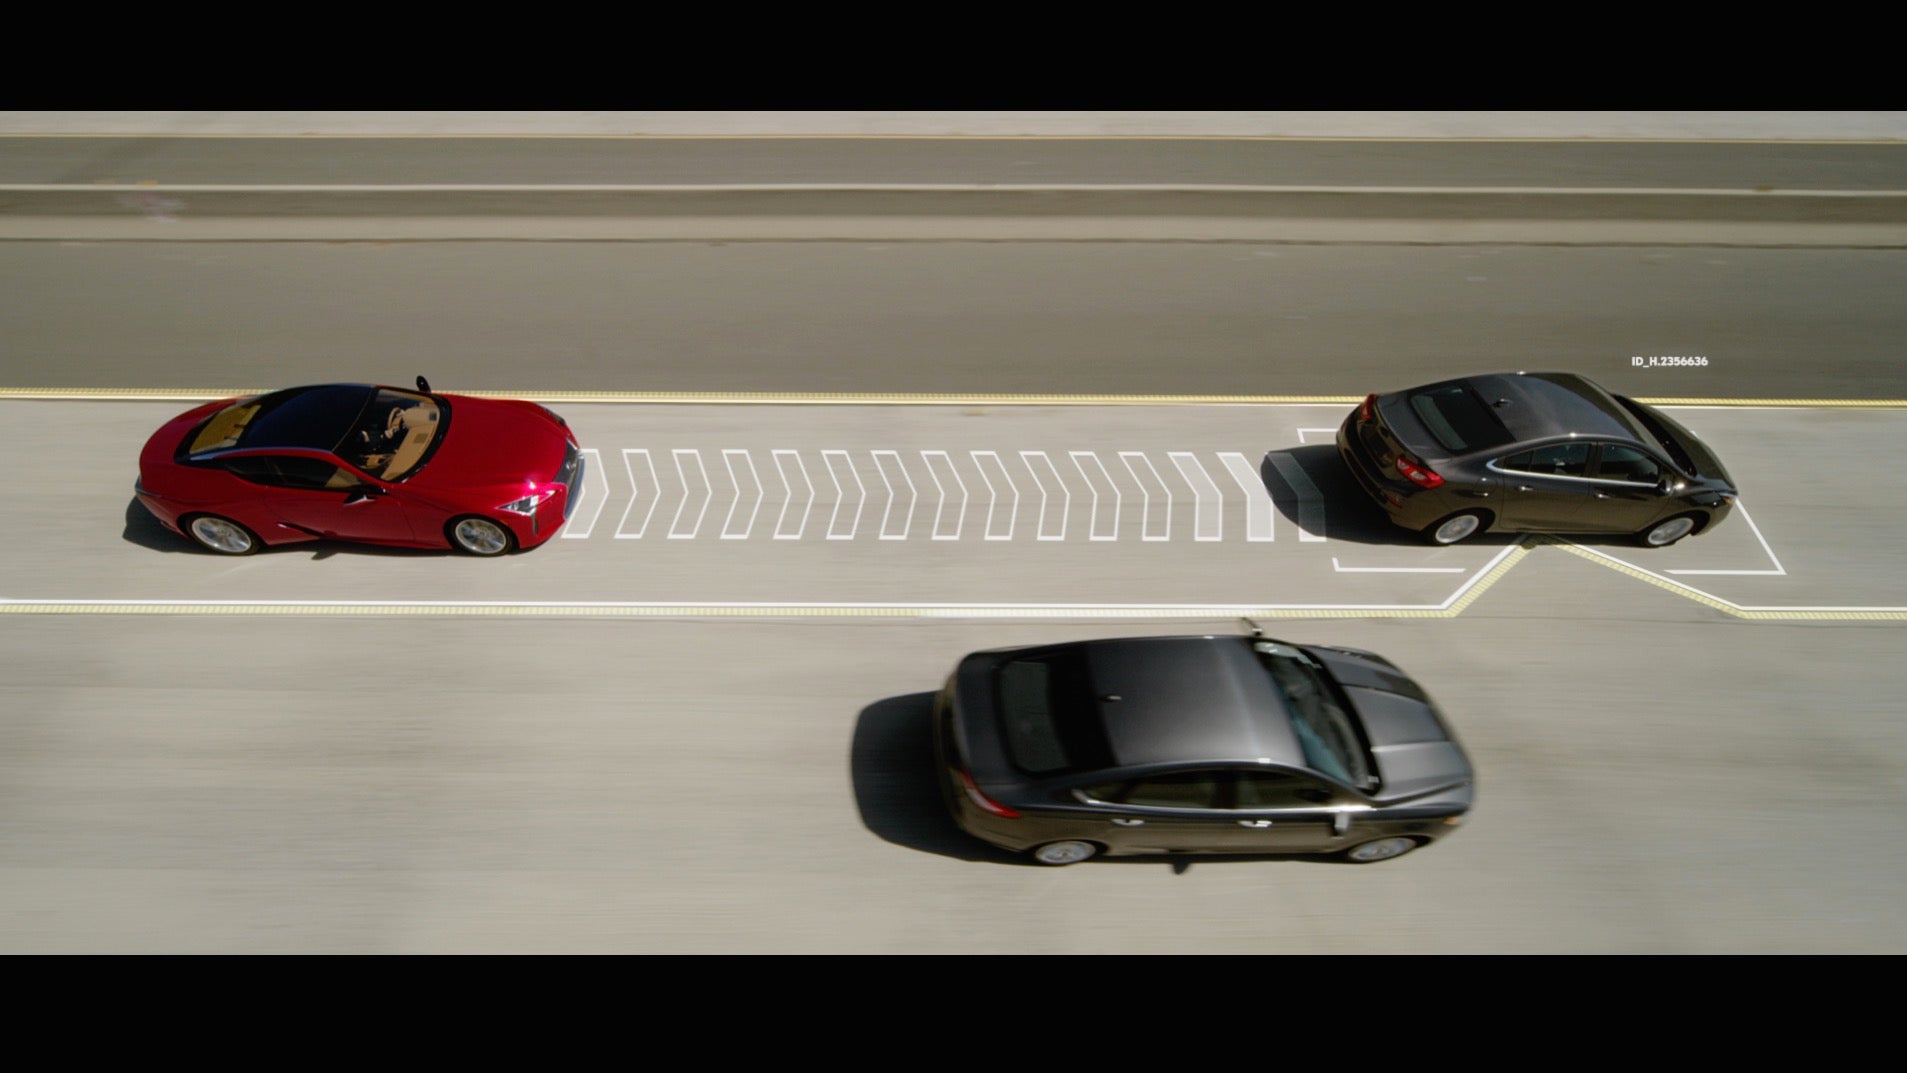 Lexus Pranks Impatient Drivers With Fake “Lane Valet”